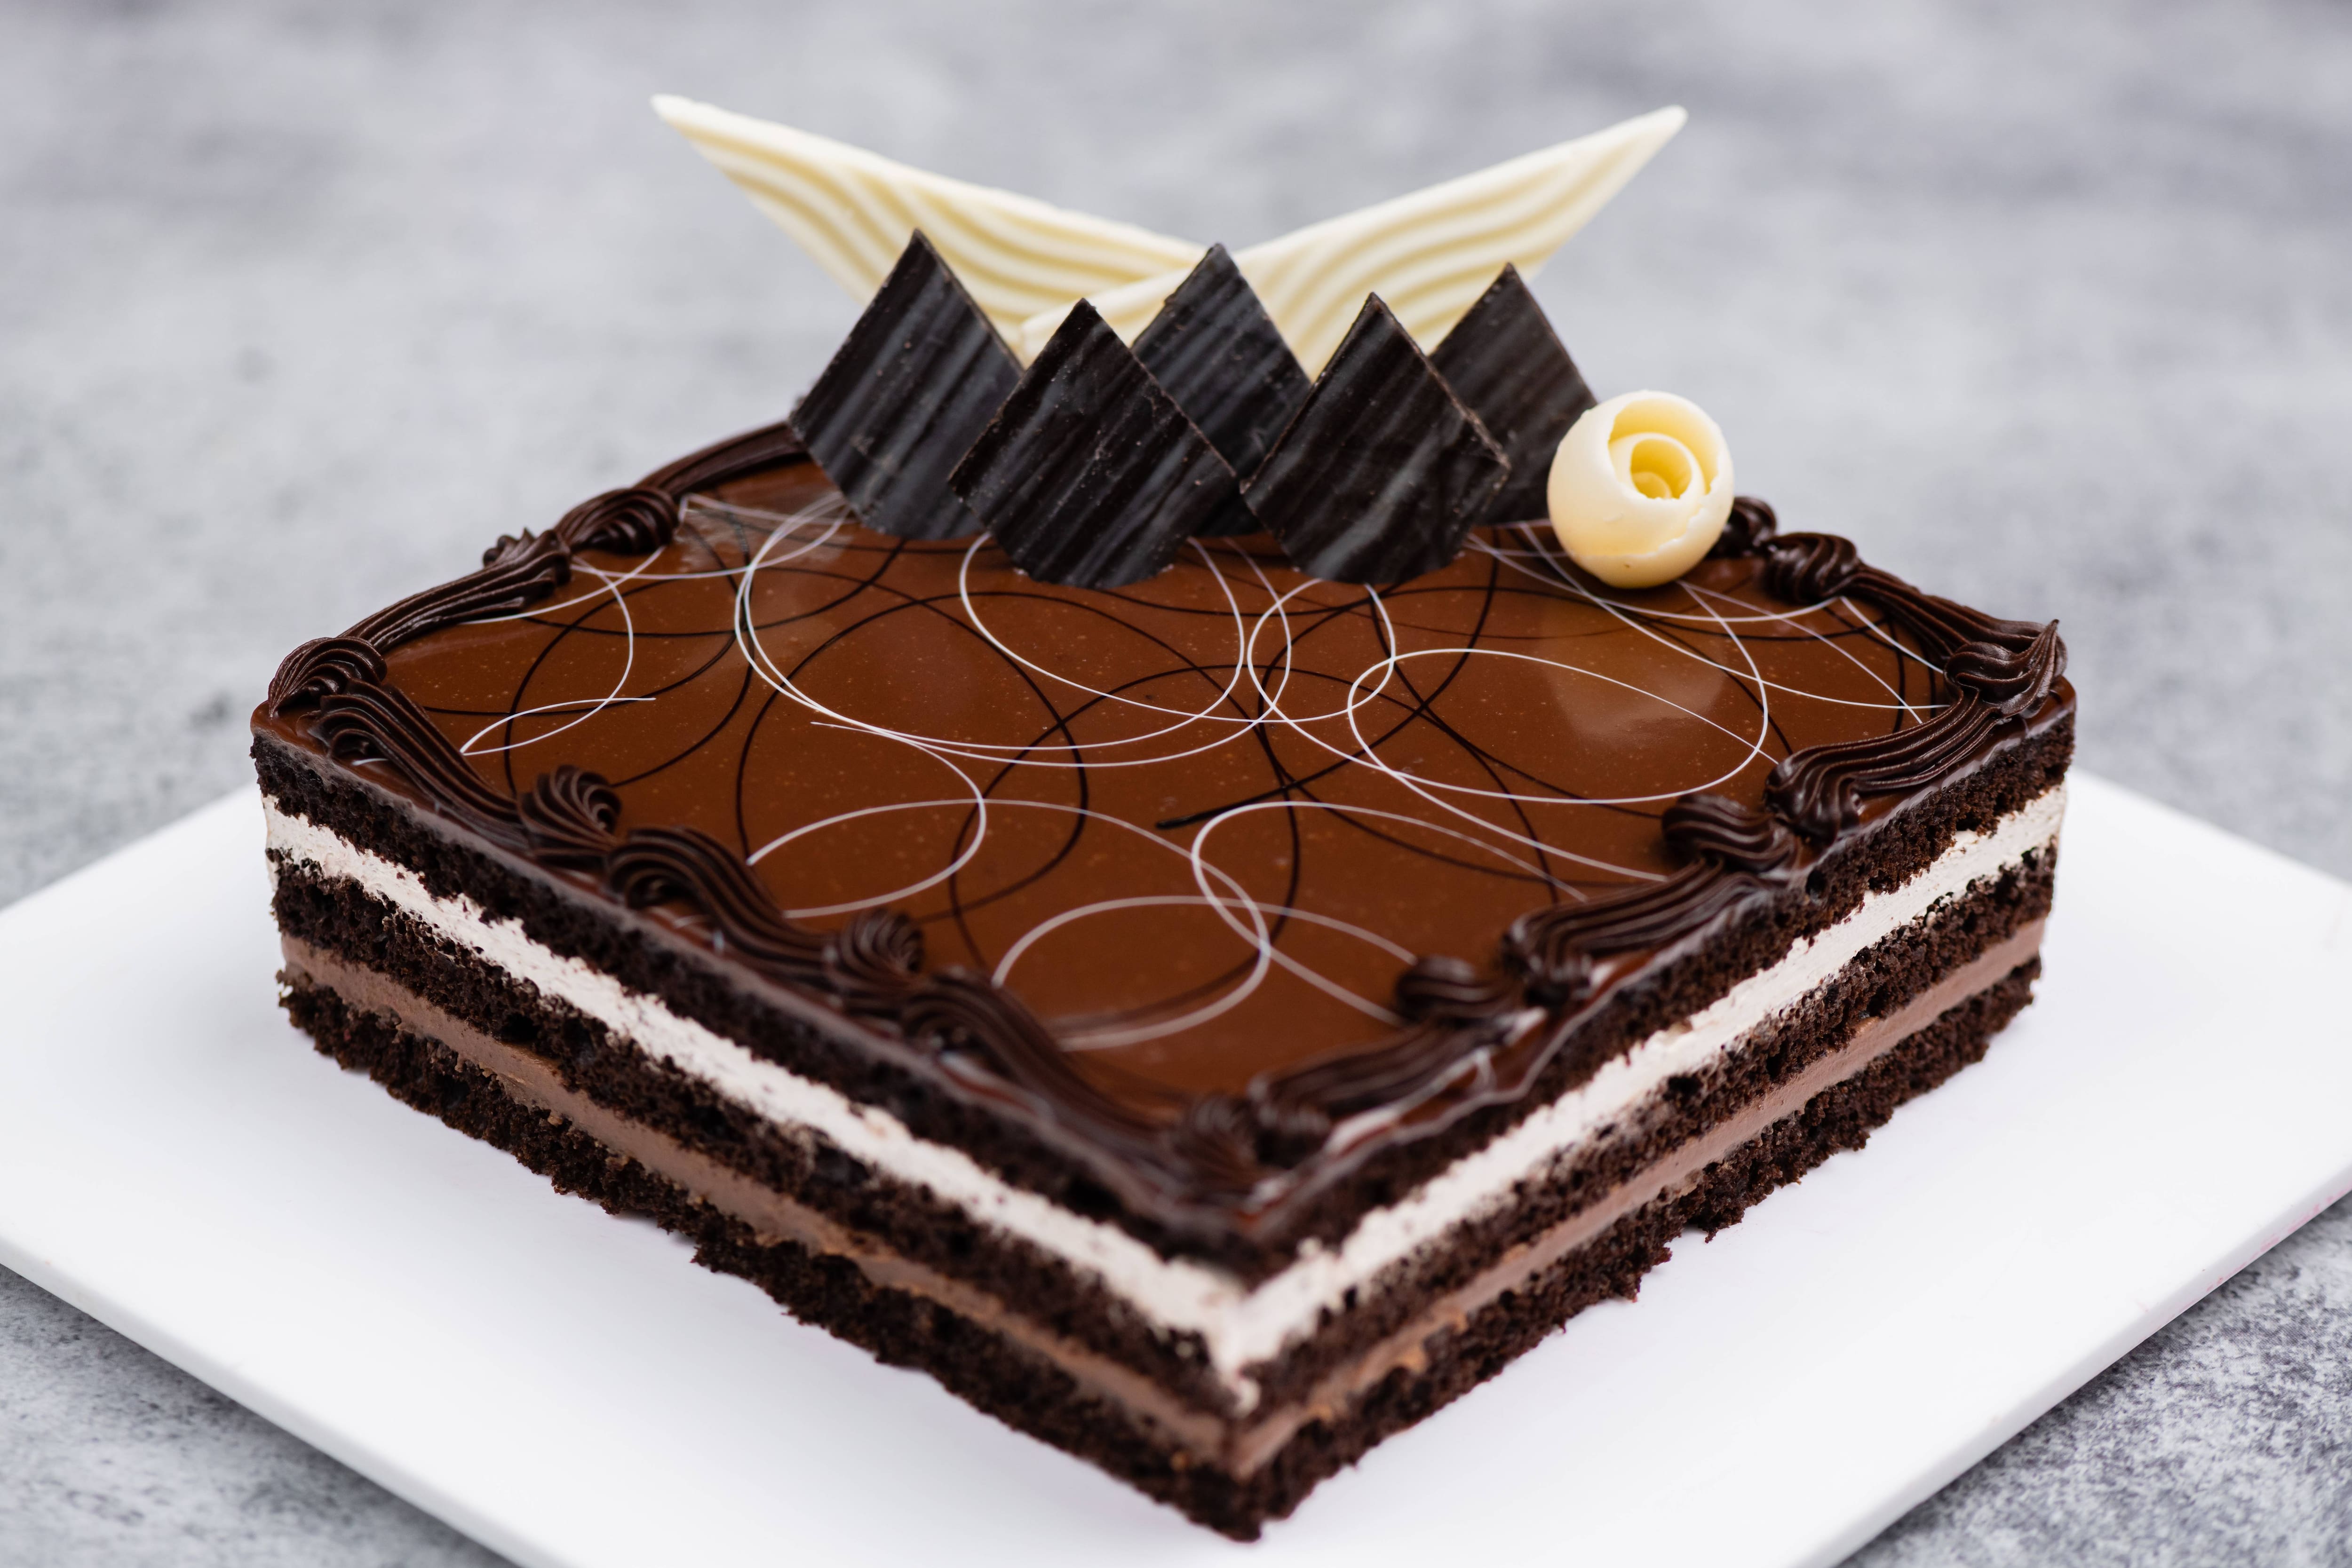 Our Chocolate Birthday Cake – LA MAISON